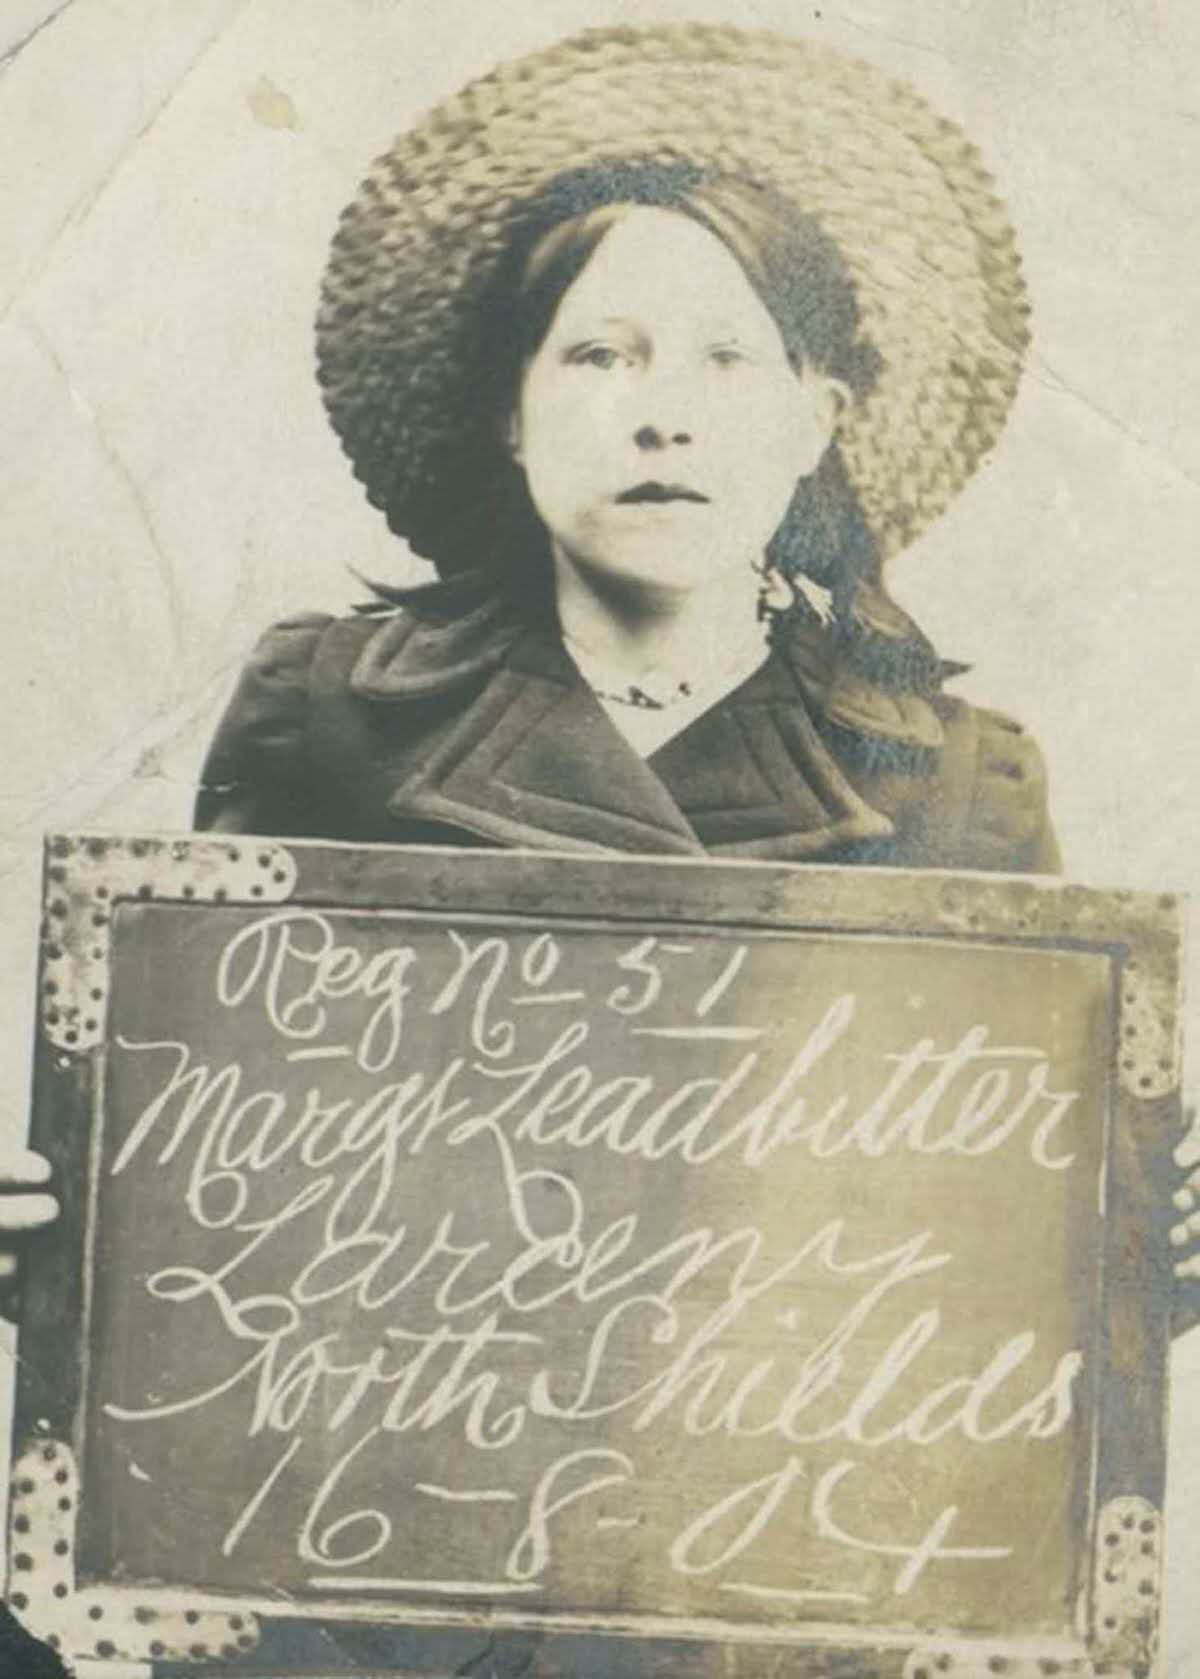 Margaret Leadbitter, 12, arrested for stealing money from other children, 1904.